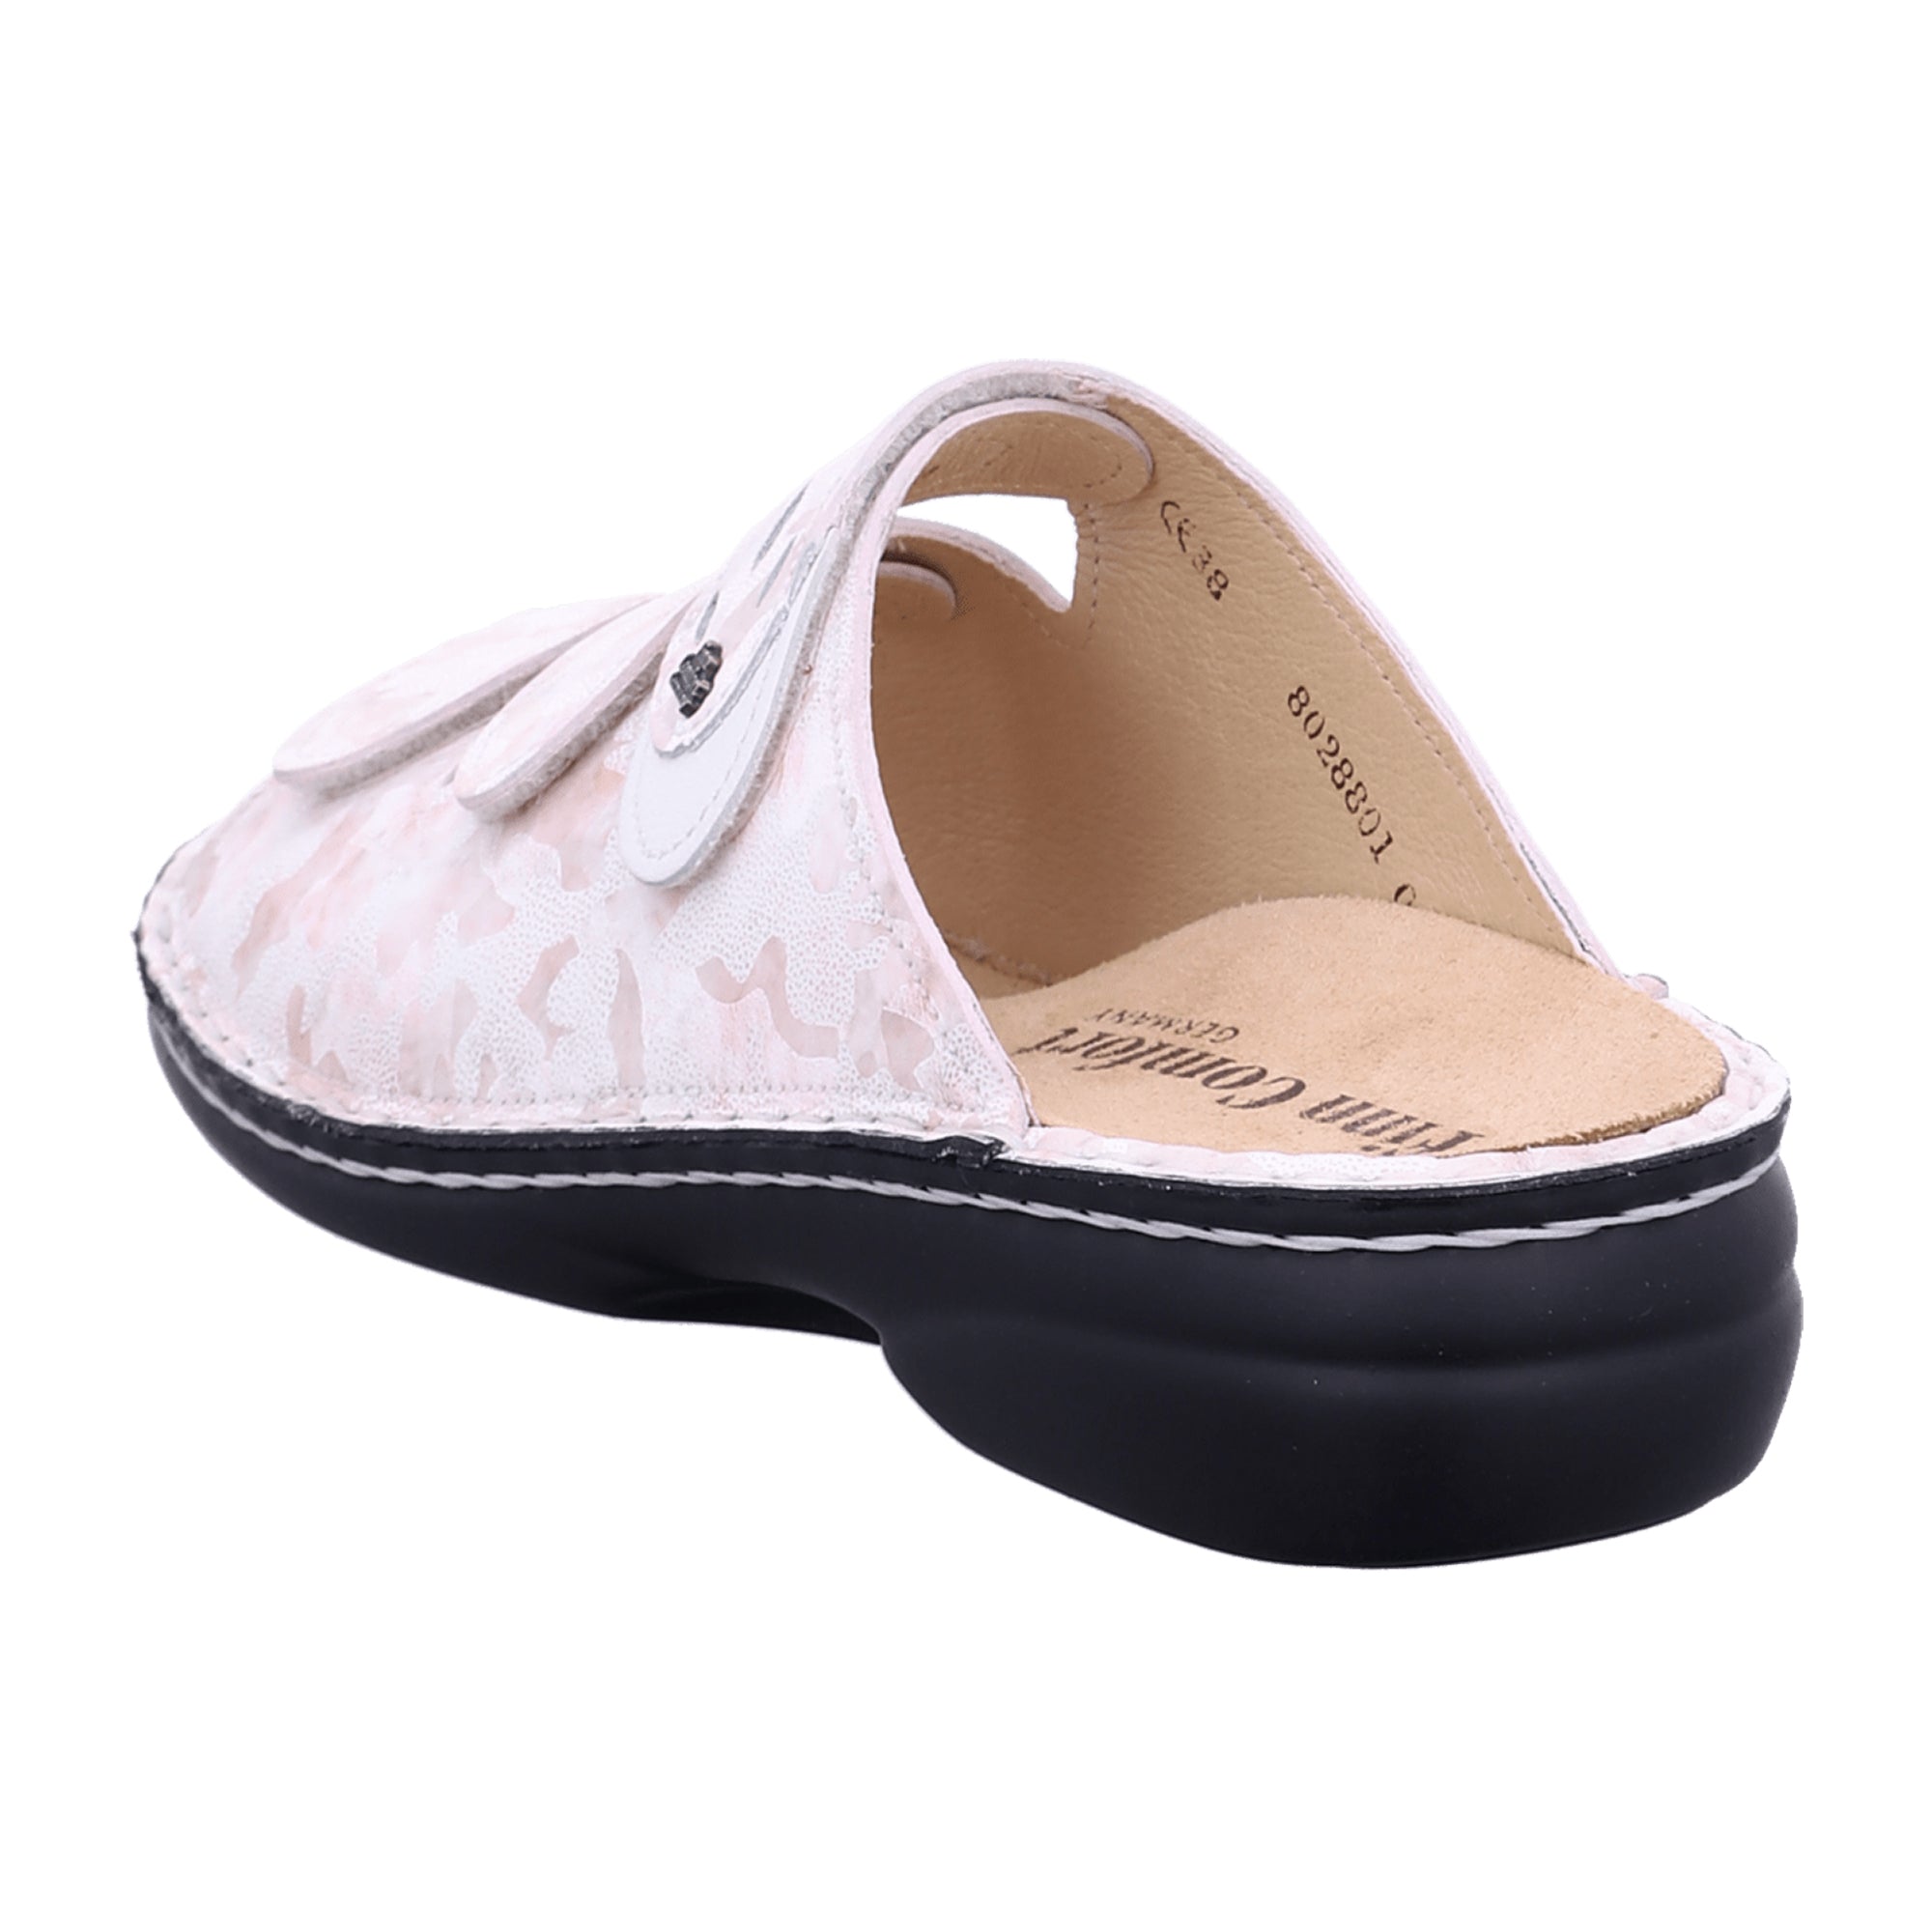 Finn Comfort KOS Women's Comfort Sandals - Stylish & Durable in White